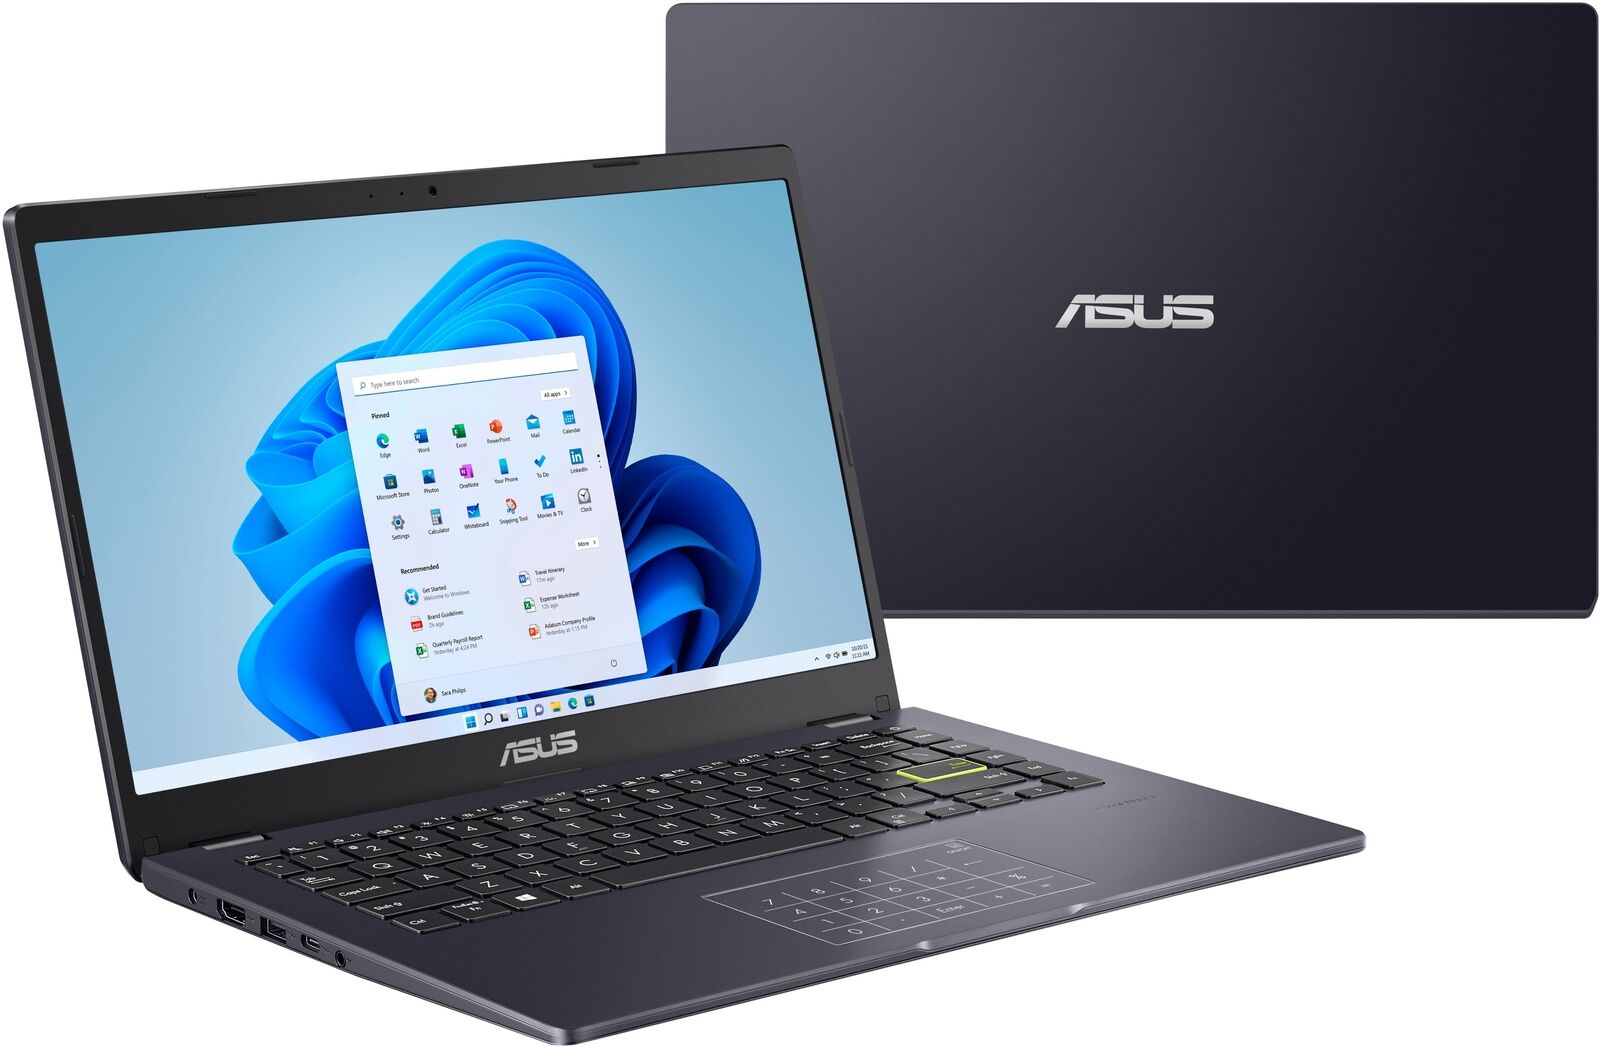 ASUS Vivobook E410 Laptop: 14" HD, Celeron N4020, 4GB DDR4, 64GB eMMC $109.99